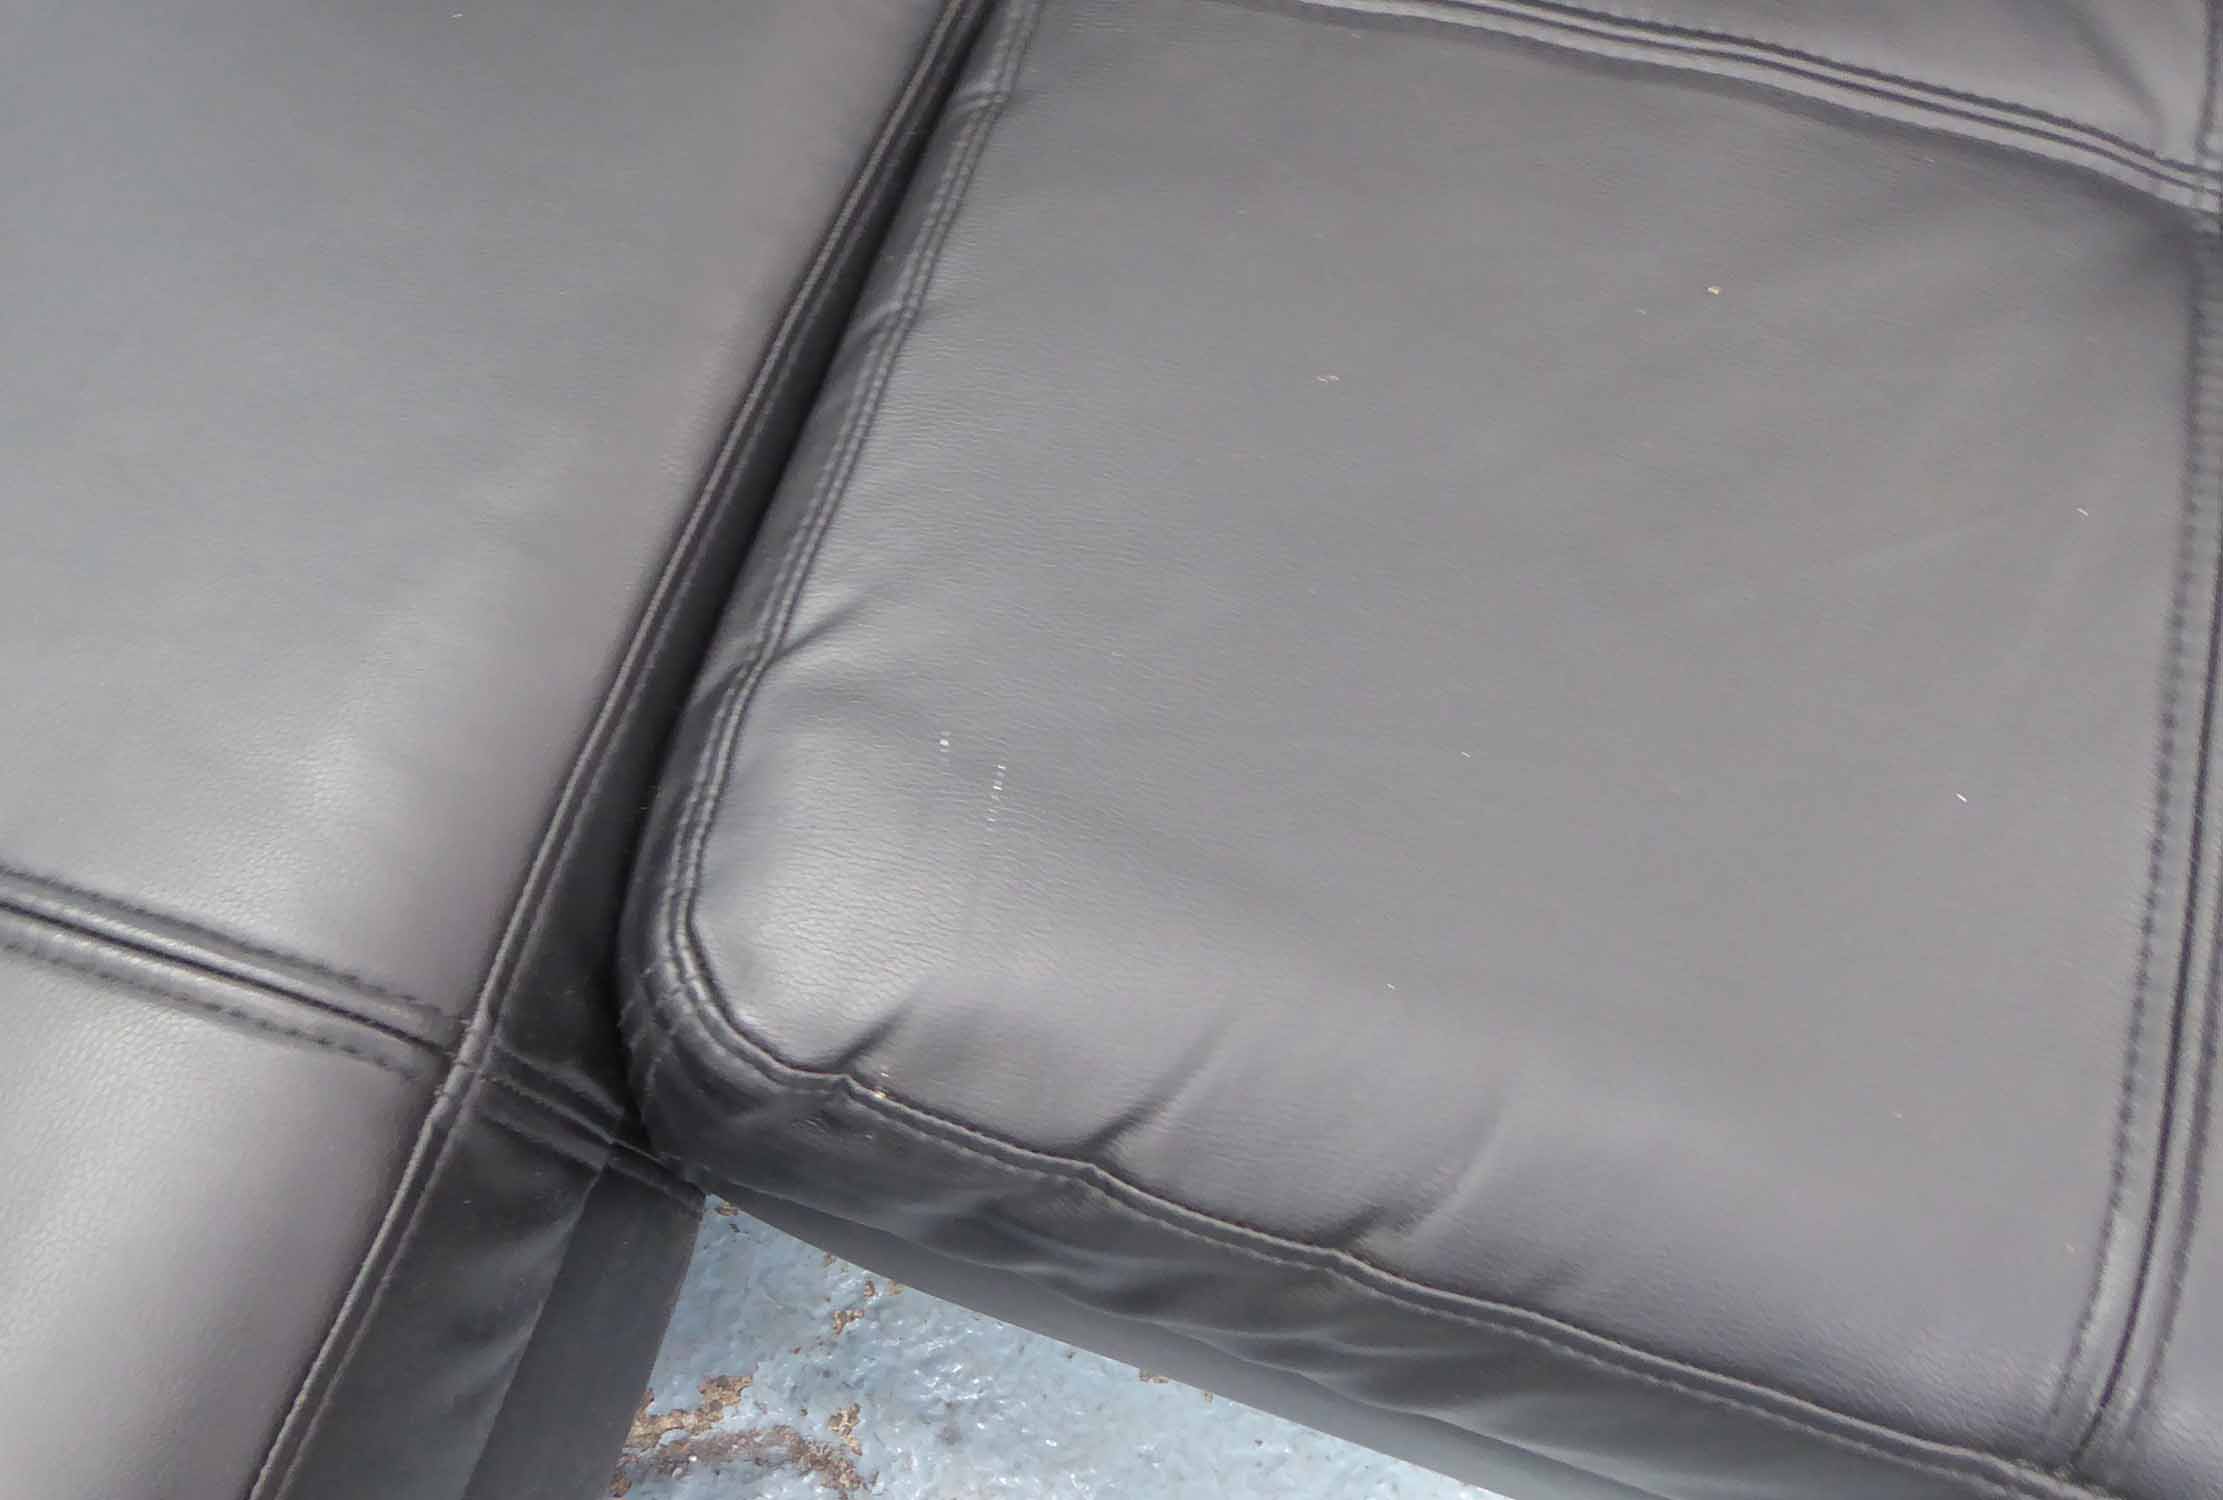 CORNER SOFA, contemporary design, black upholstered finish, 400cm at Longest x 62cm H. - Image 3 of 4